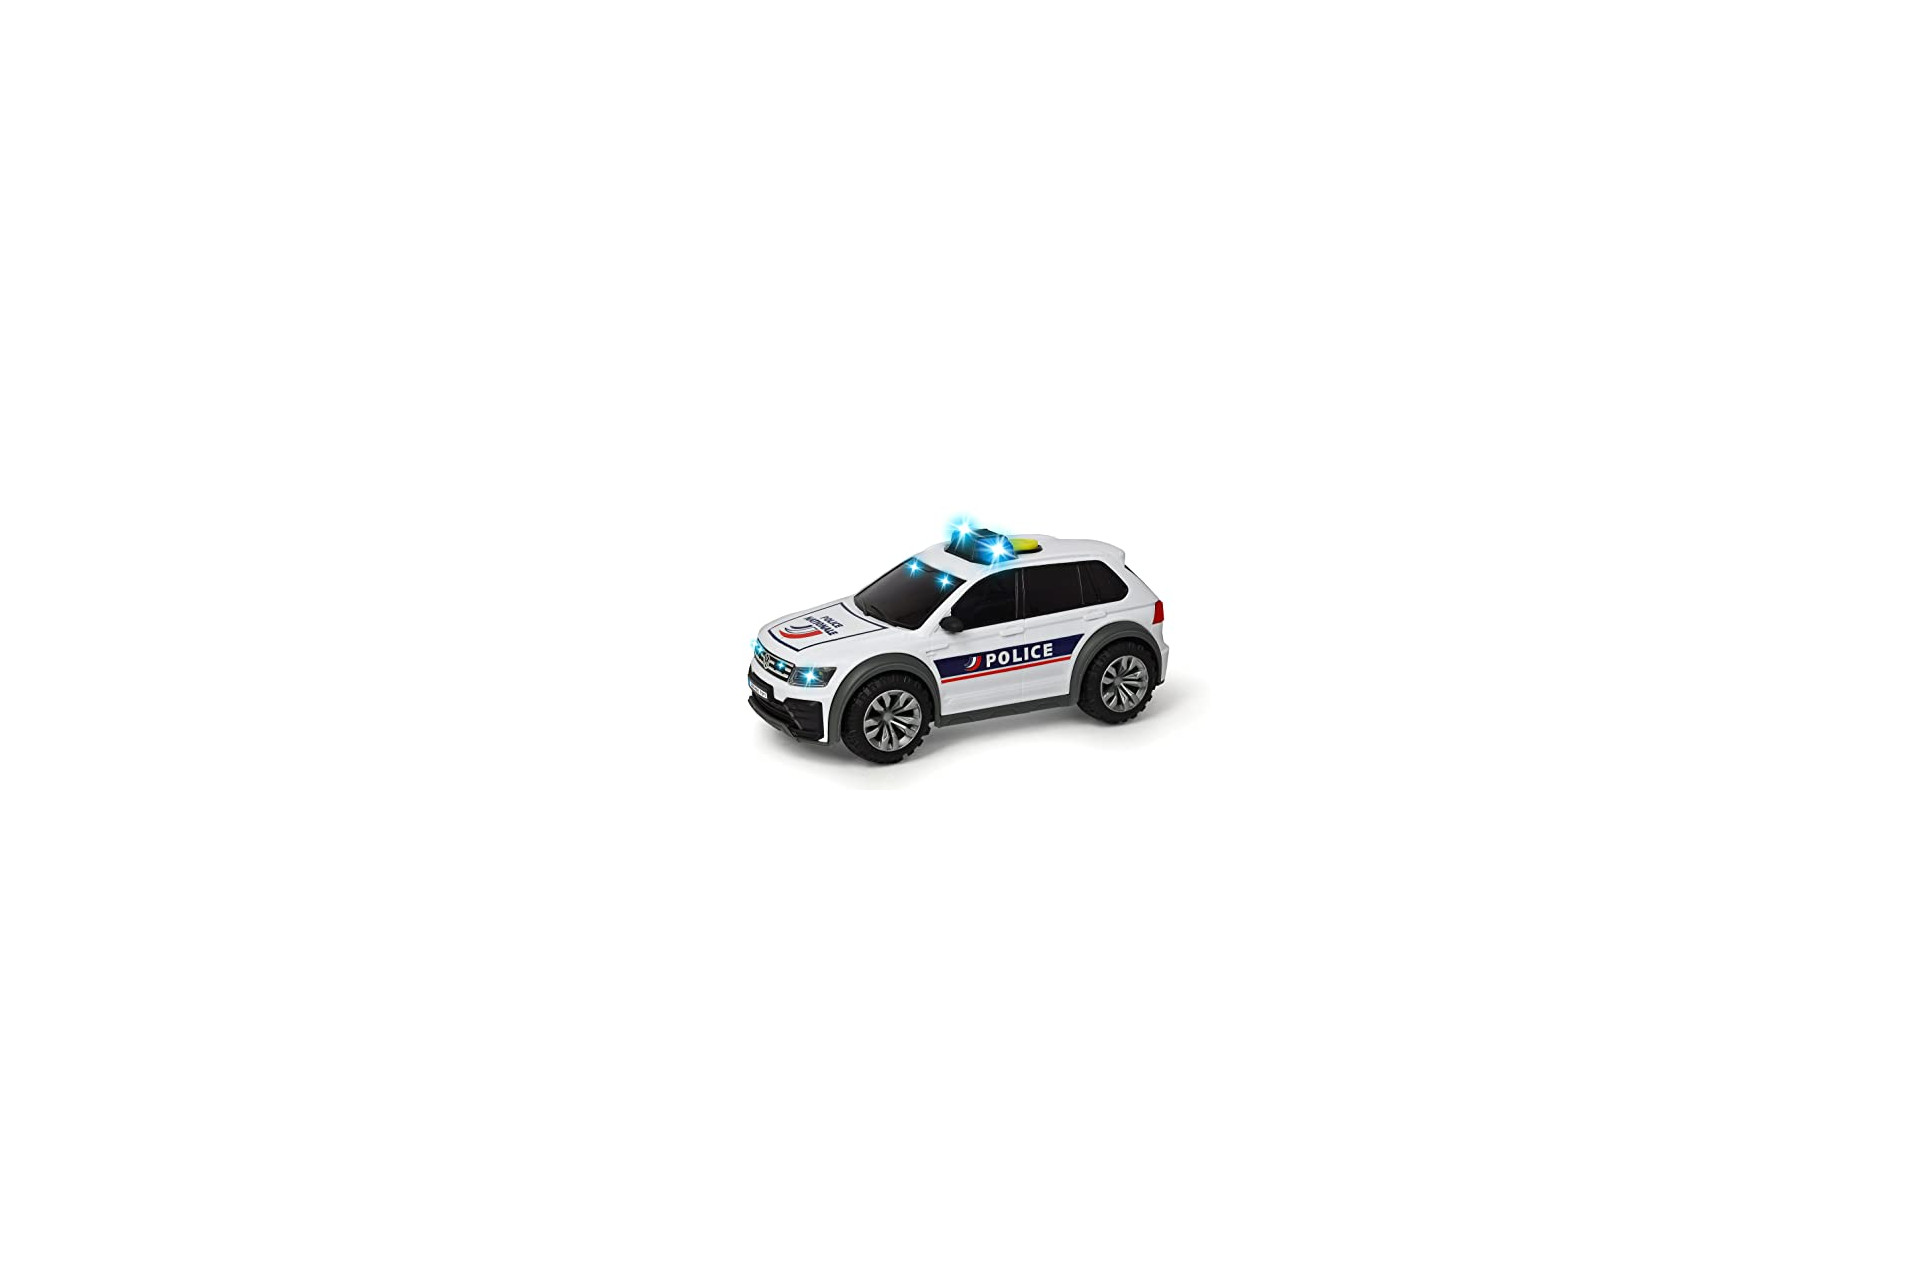 Acheter Dickie - VW Tiguan Voiture de Police 25cm